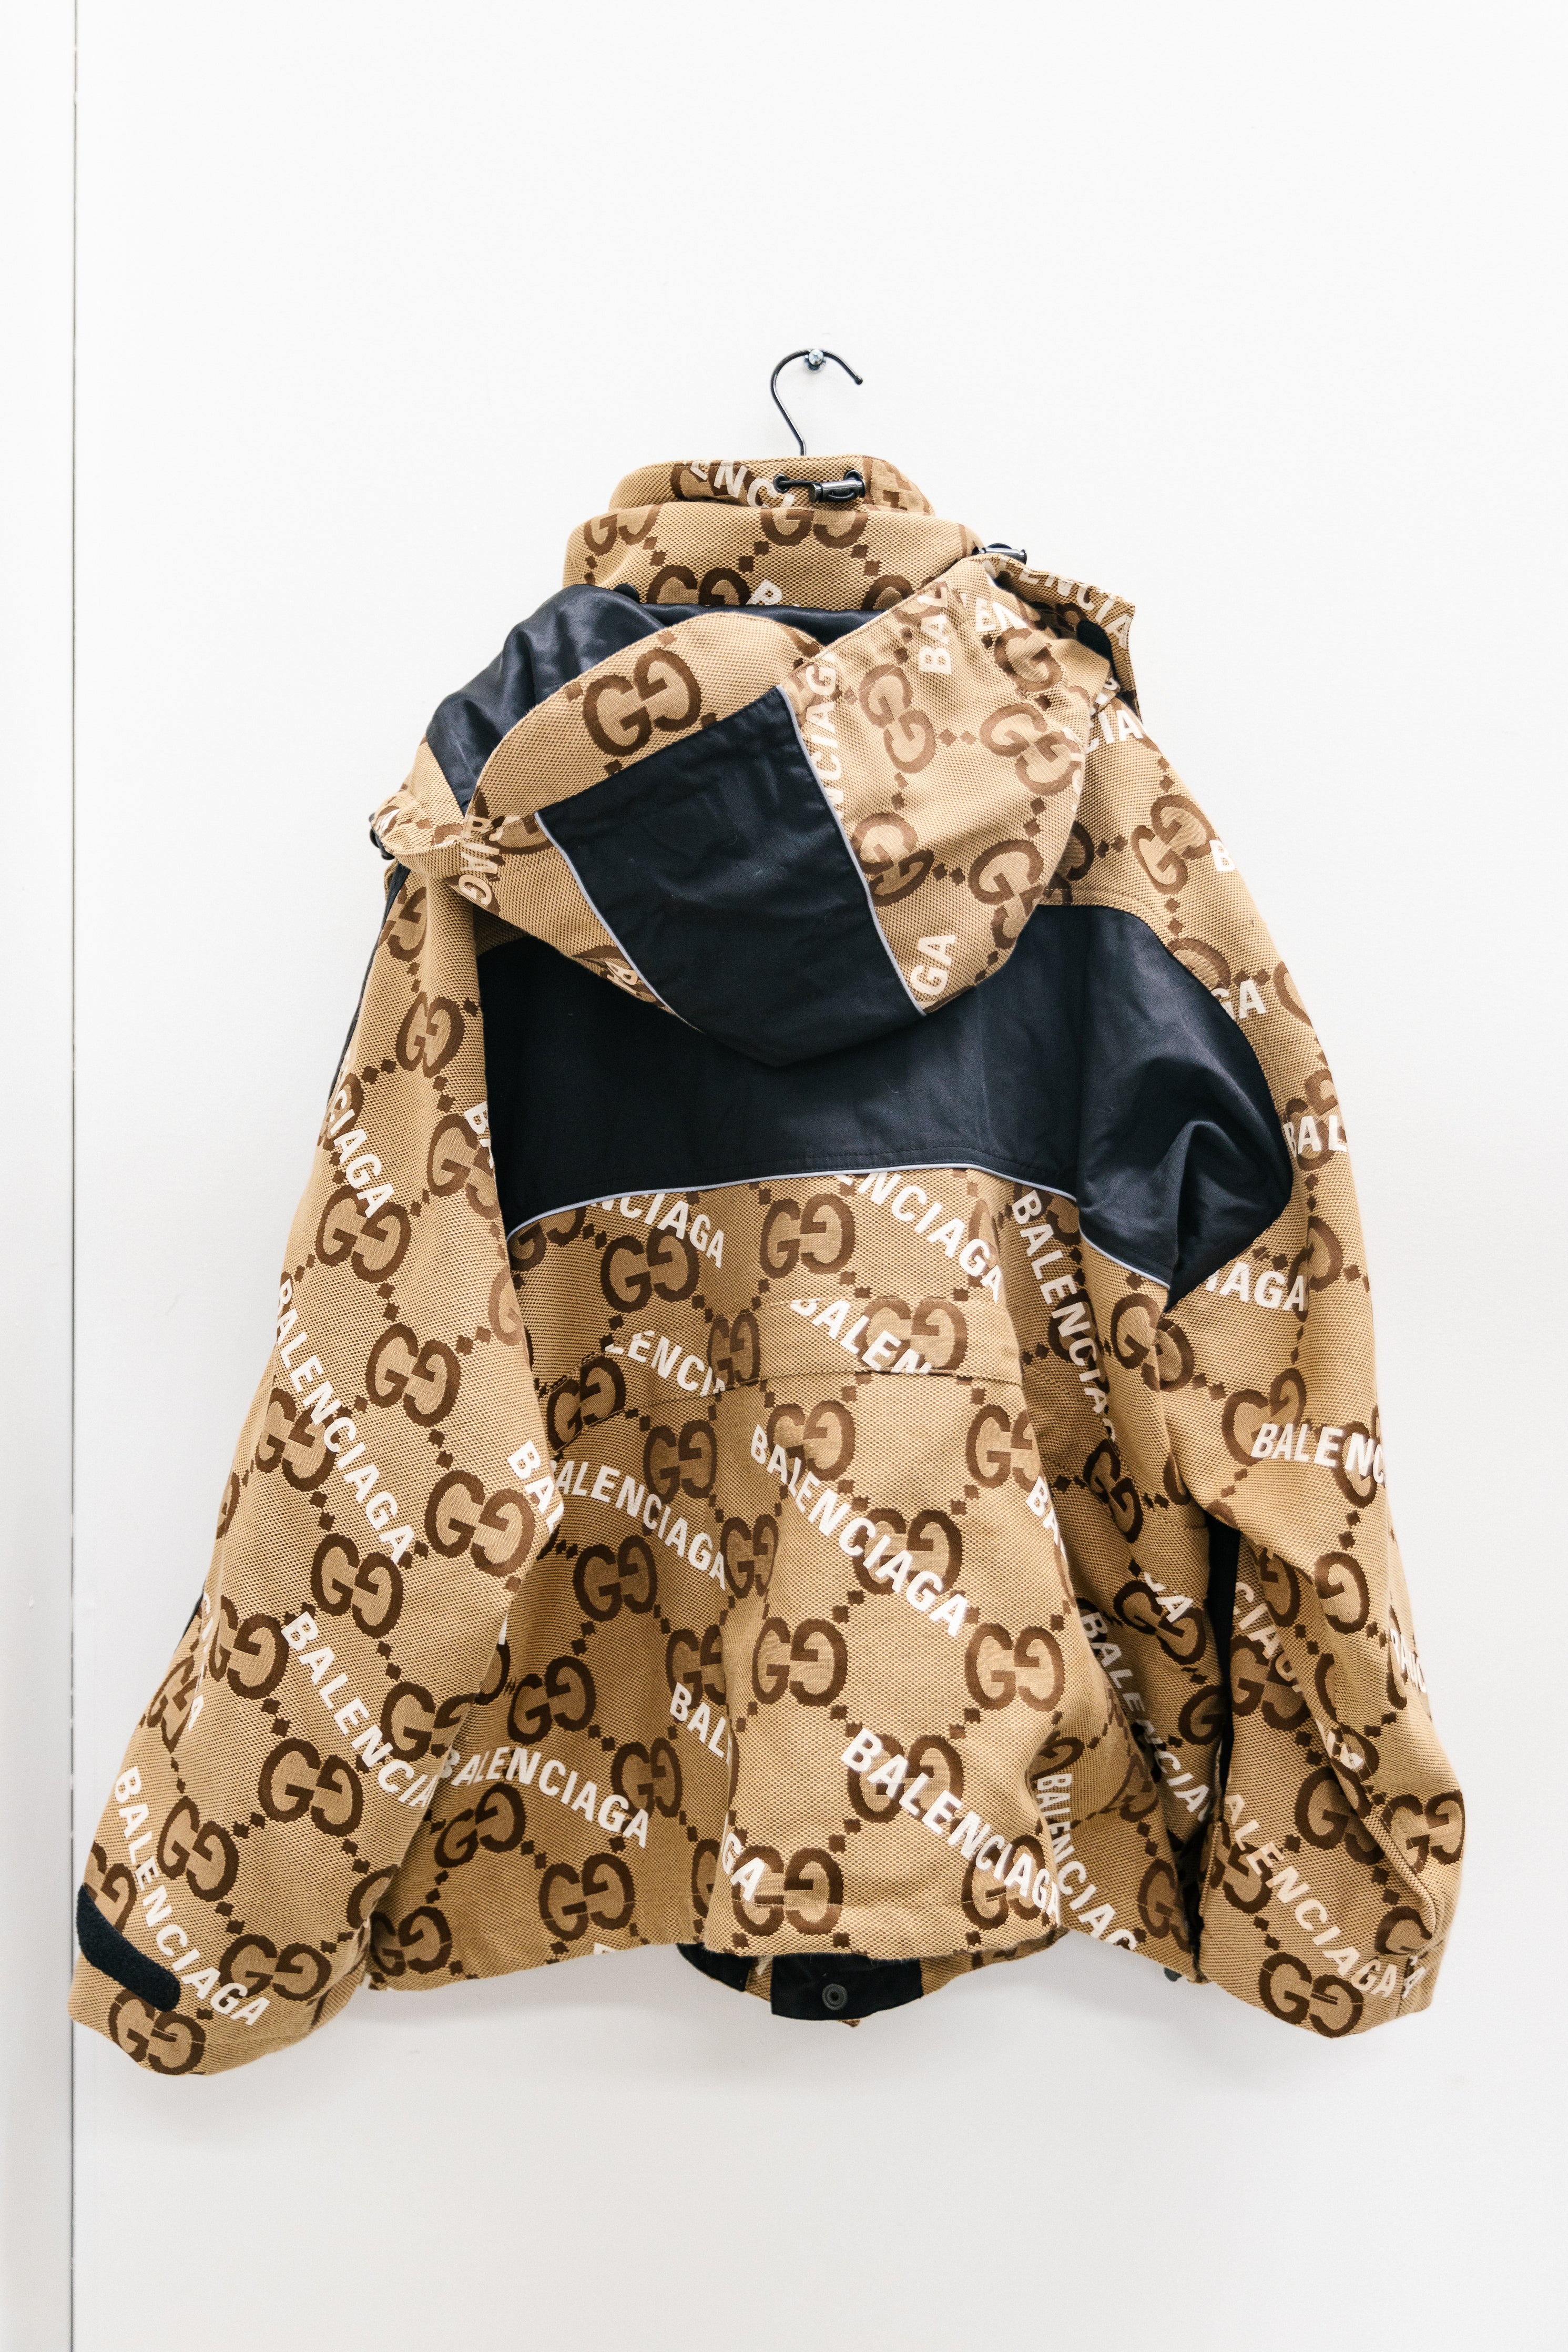 Balenciaga × Gucci
'Hacker Project' GG Jumbo Jacket